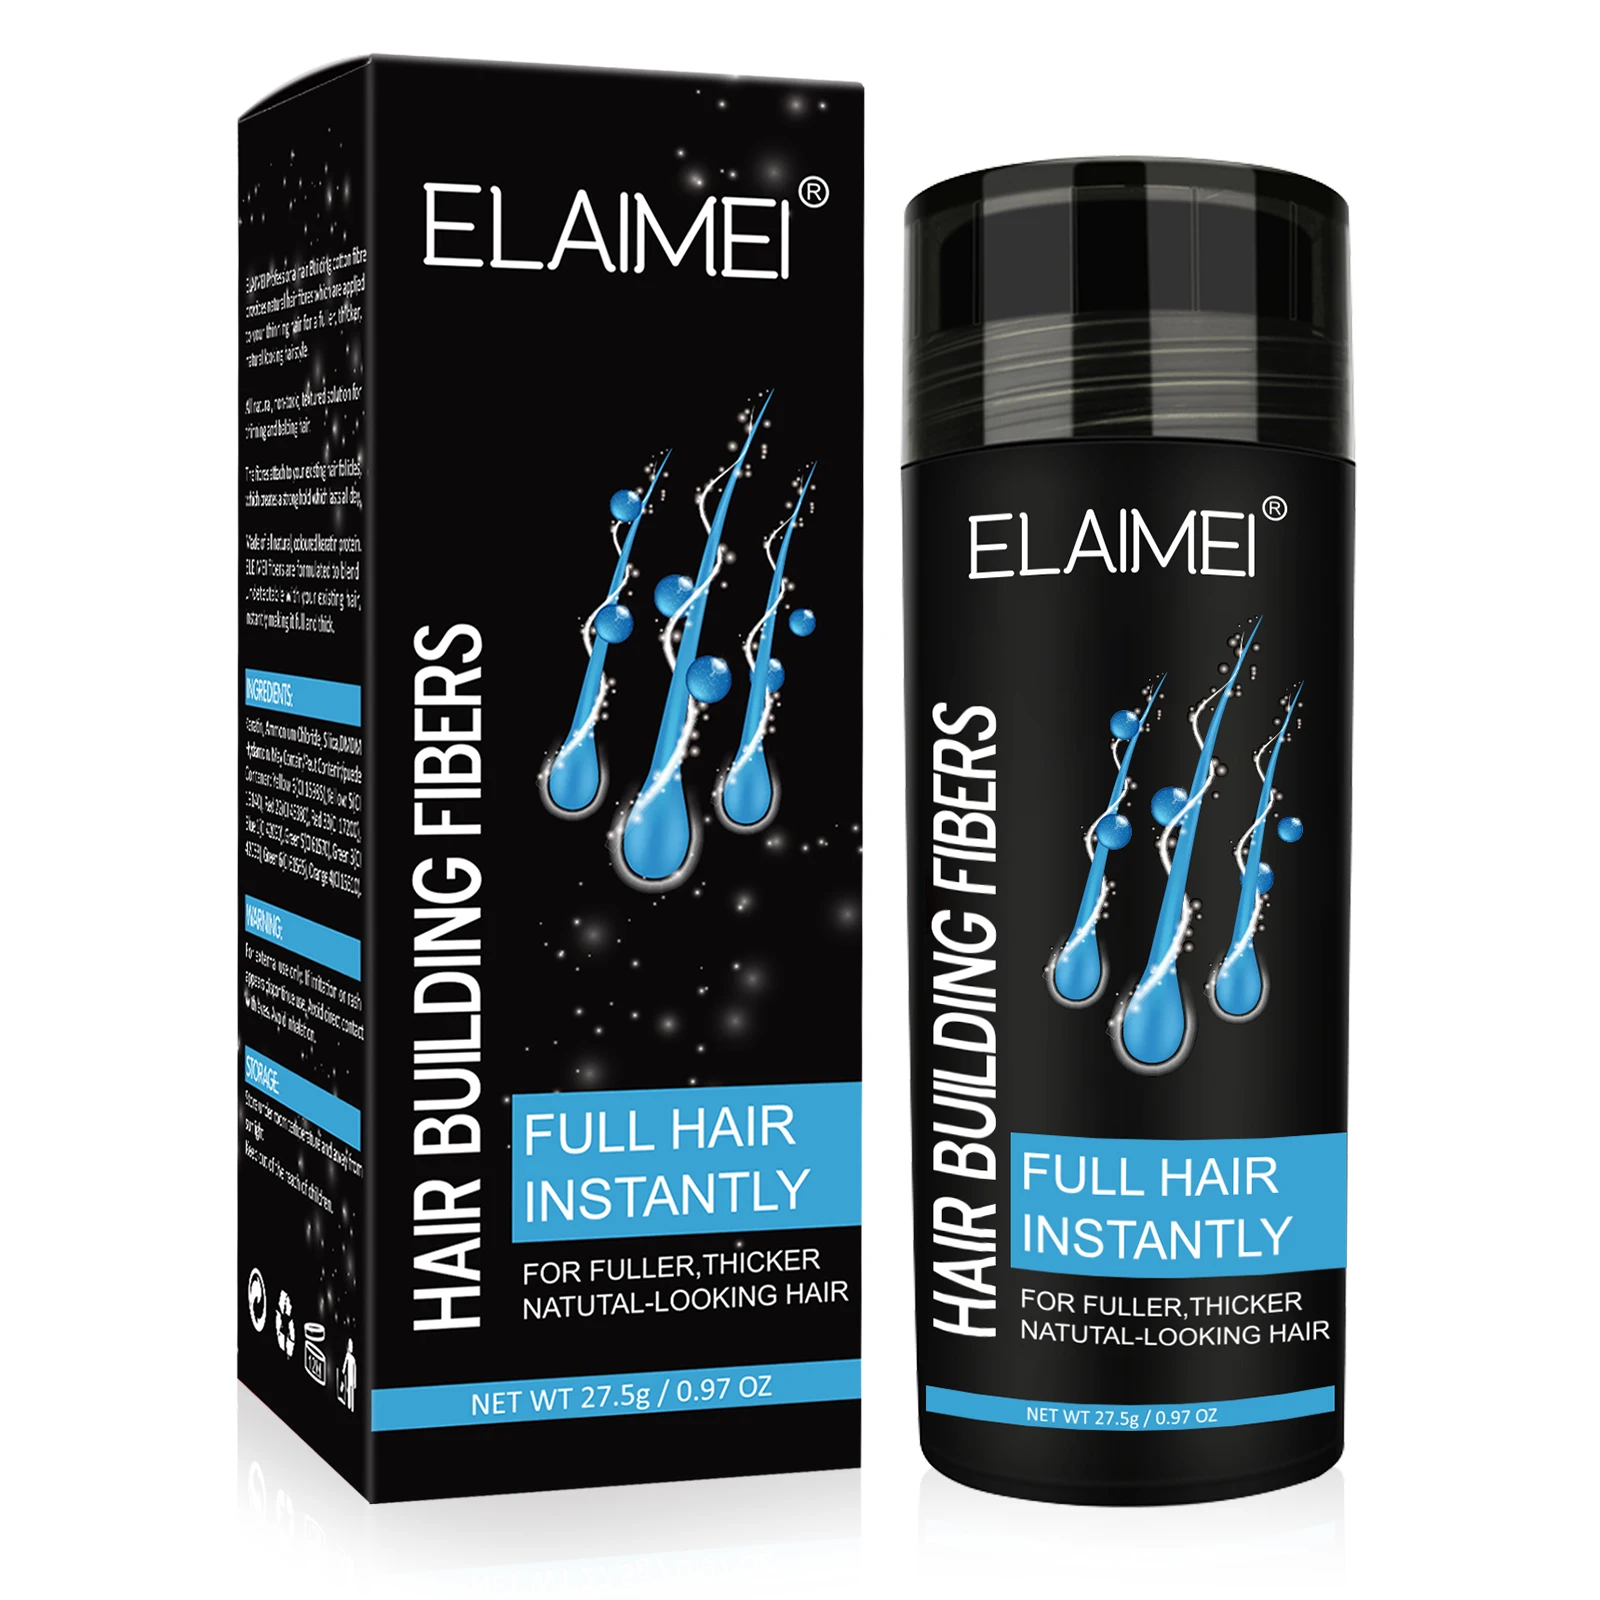 

ELAIMEI Waterproof Hair Loss Treatment Hair Building Fiber Spray Powder Instant Thickening Fully Keratin Hair Fibers Powder